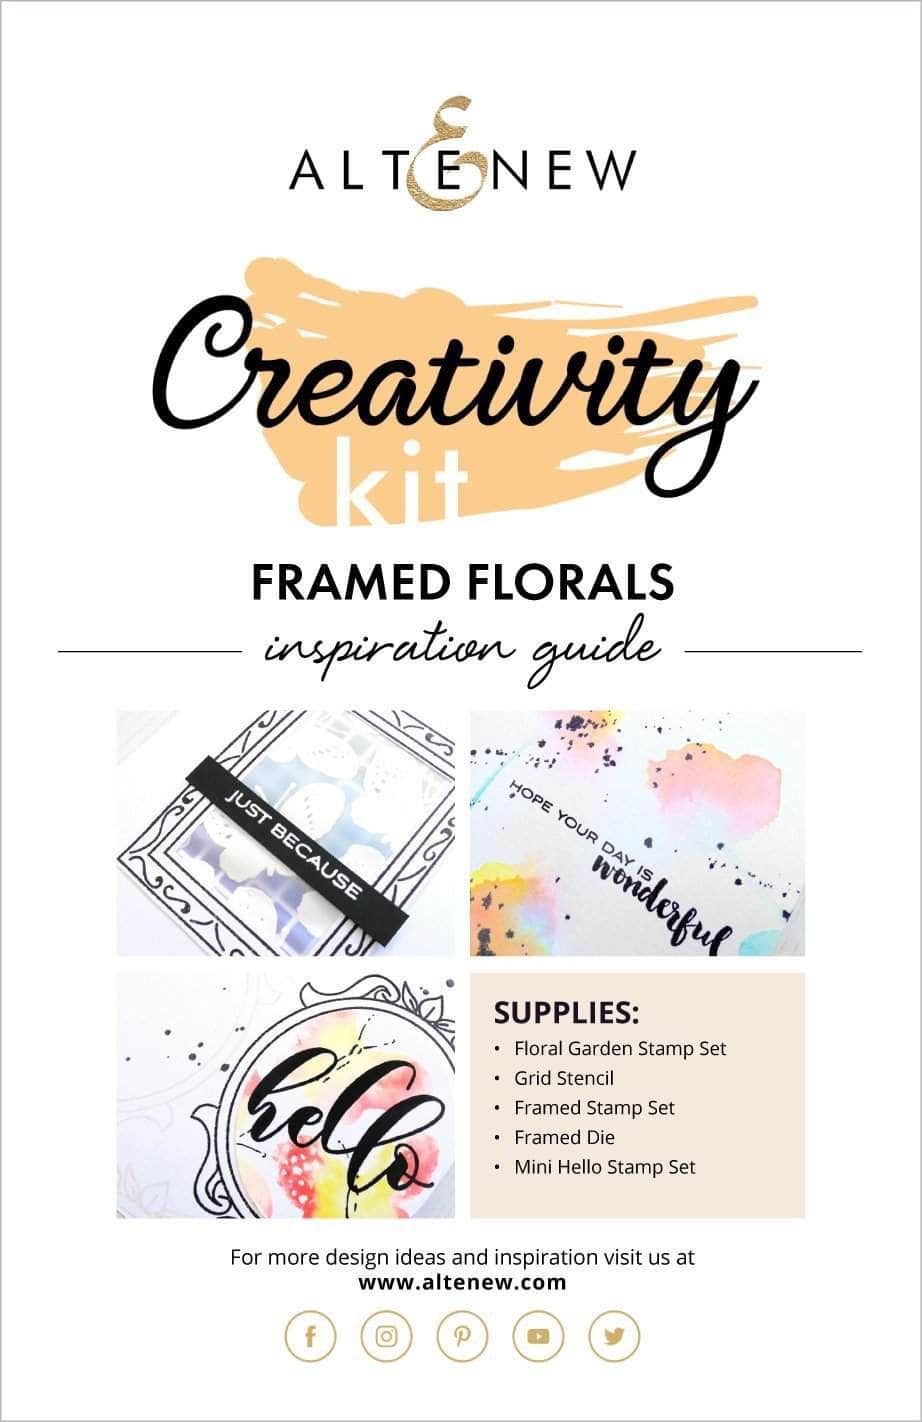 Printed Media Framed Florals Creativity Kit Inspiration Guide